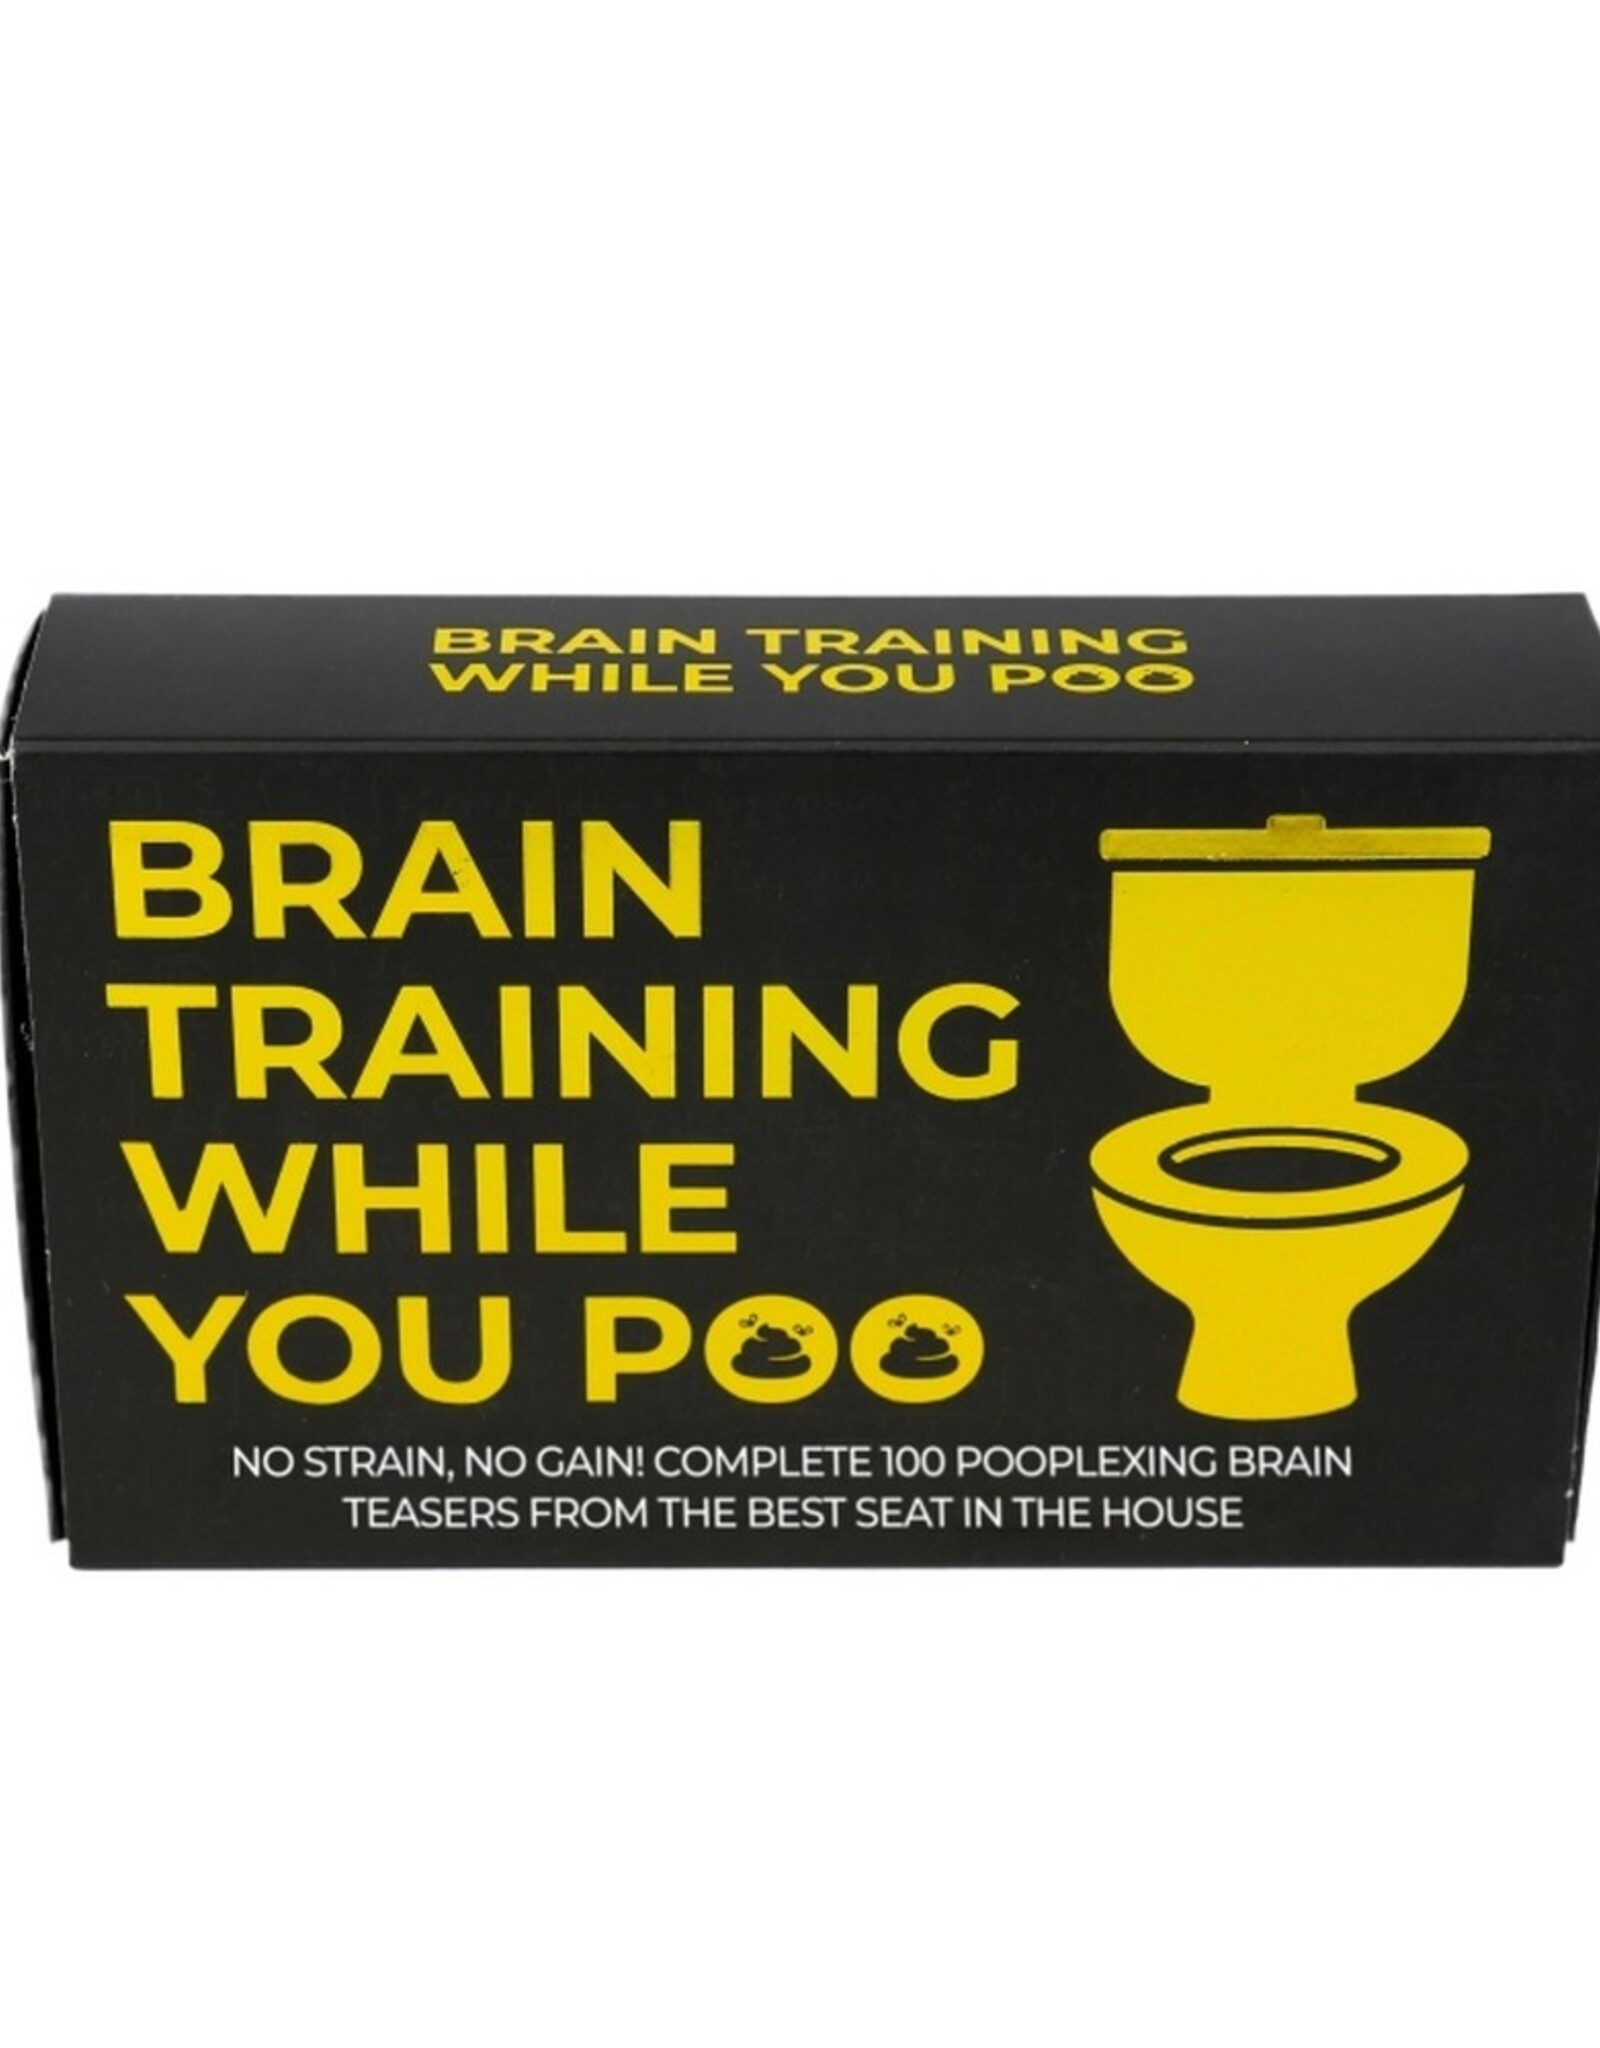 Gift Republic Brain training while you poo